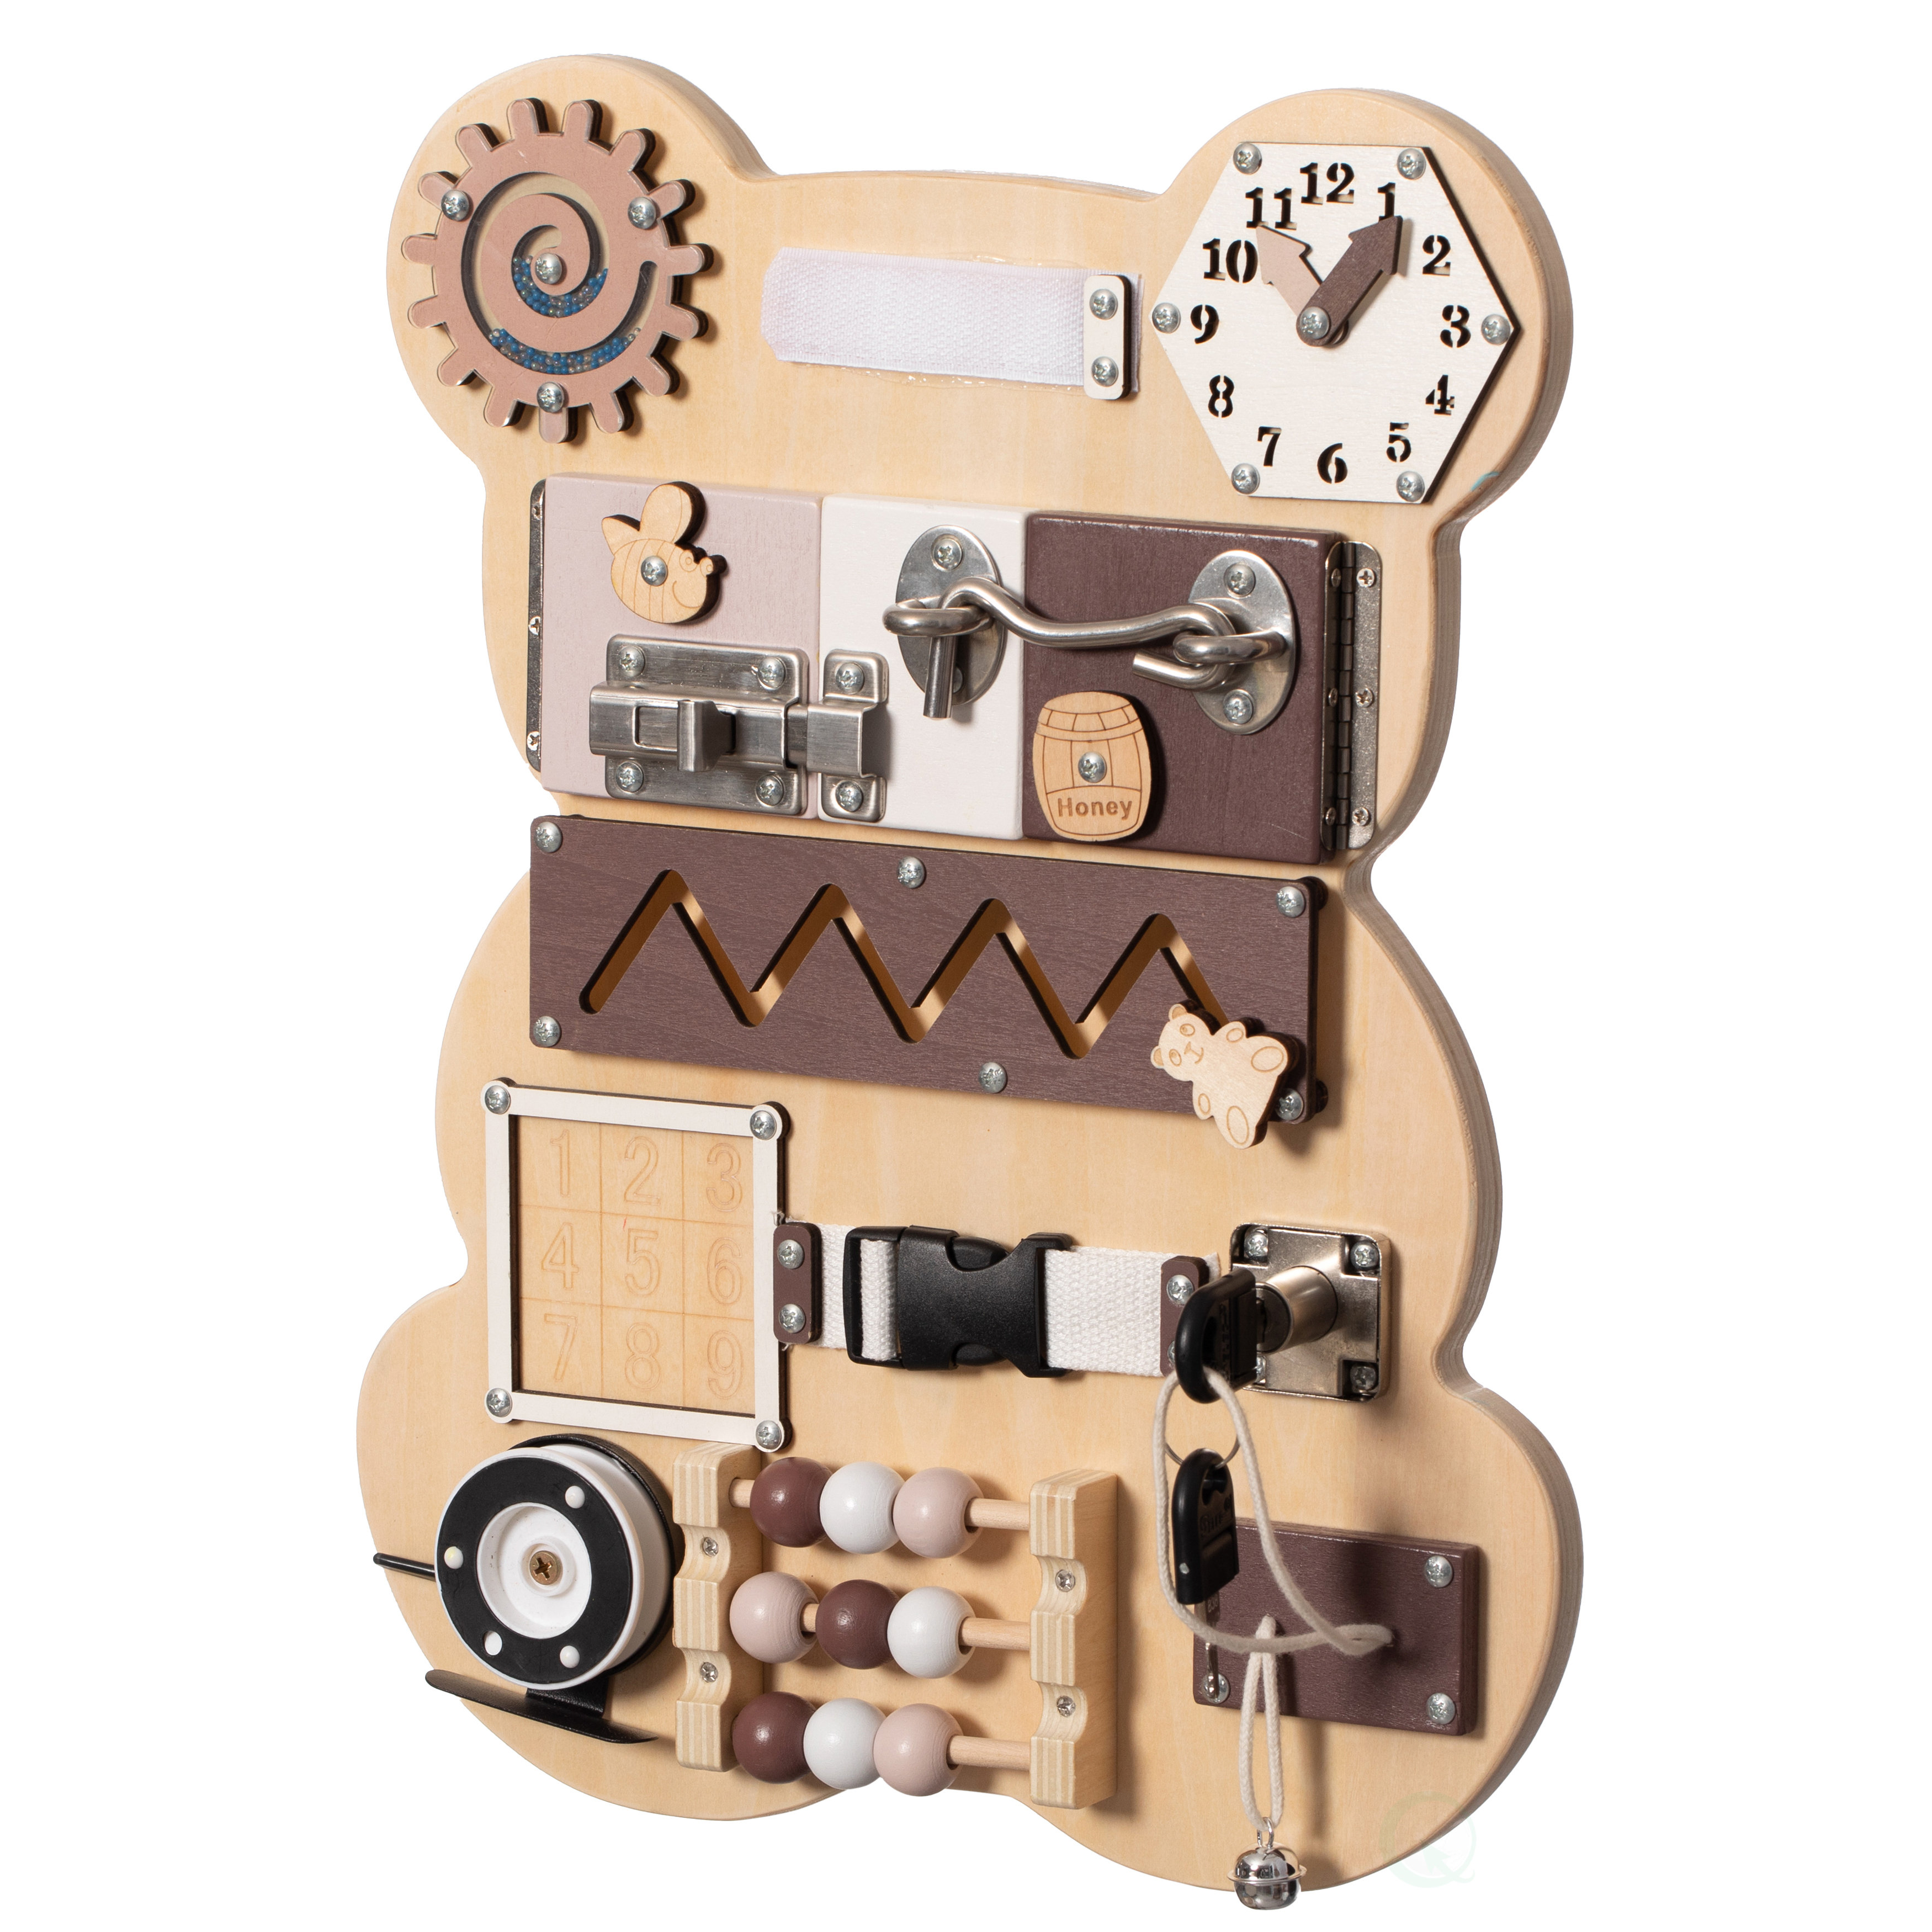 ShpilMaster Wooden Sensory Bear Shaped Learning Toddler Busy Board